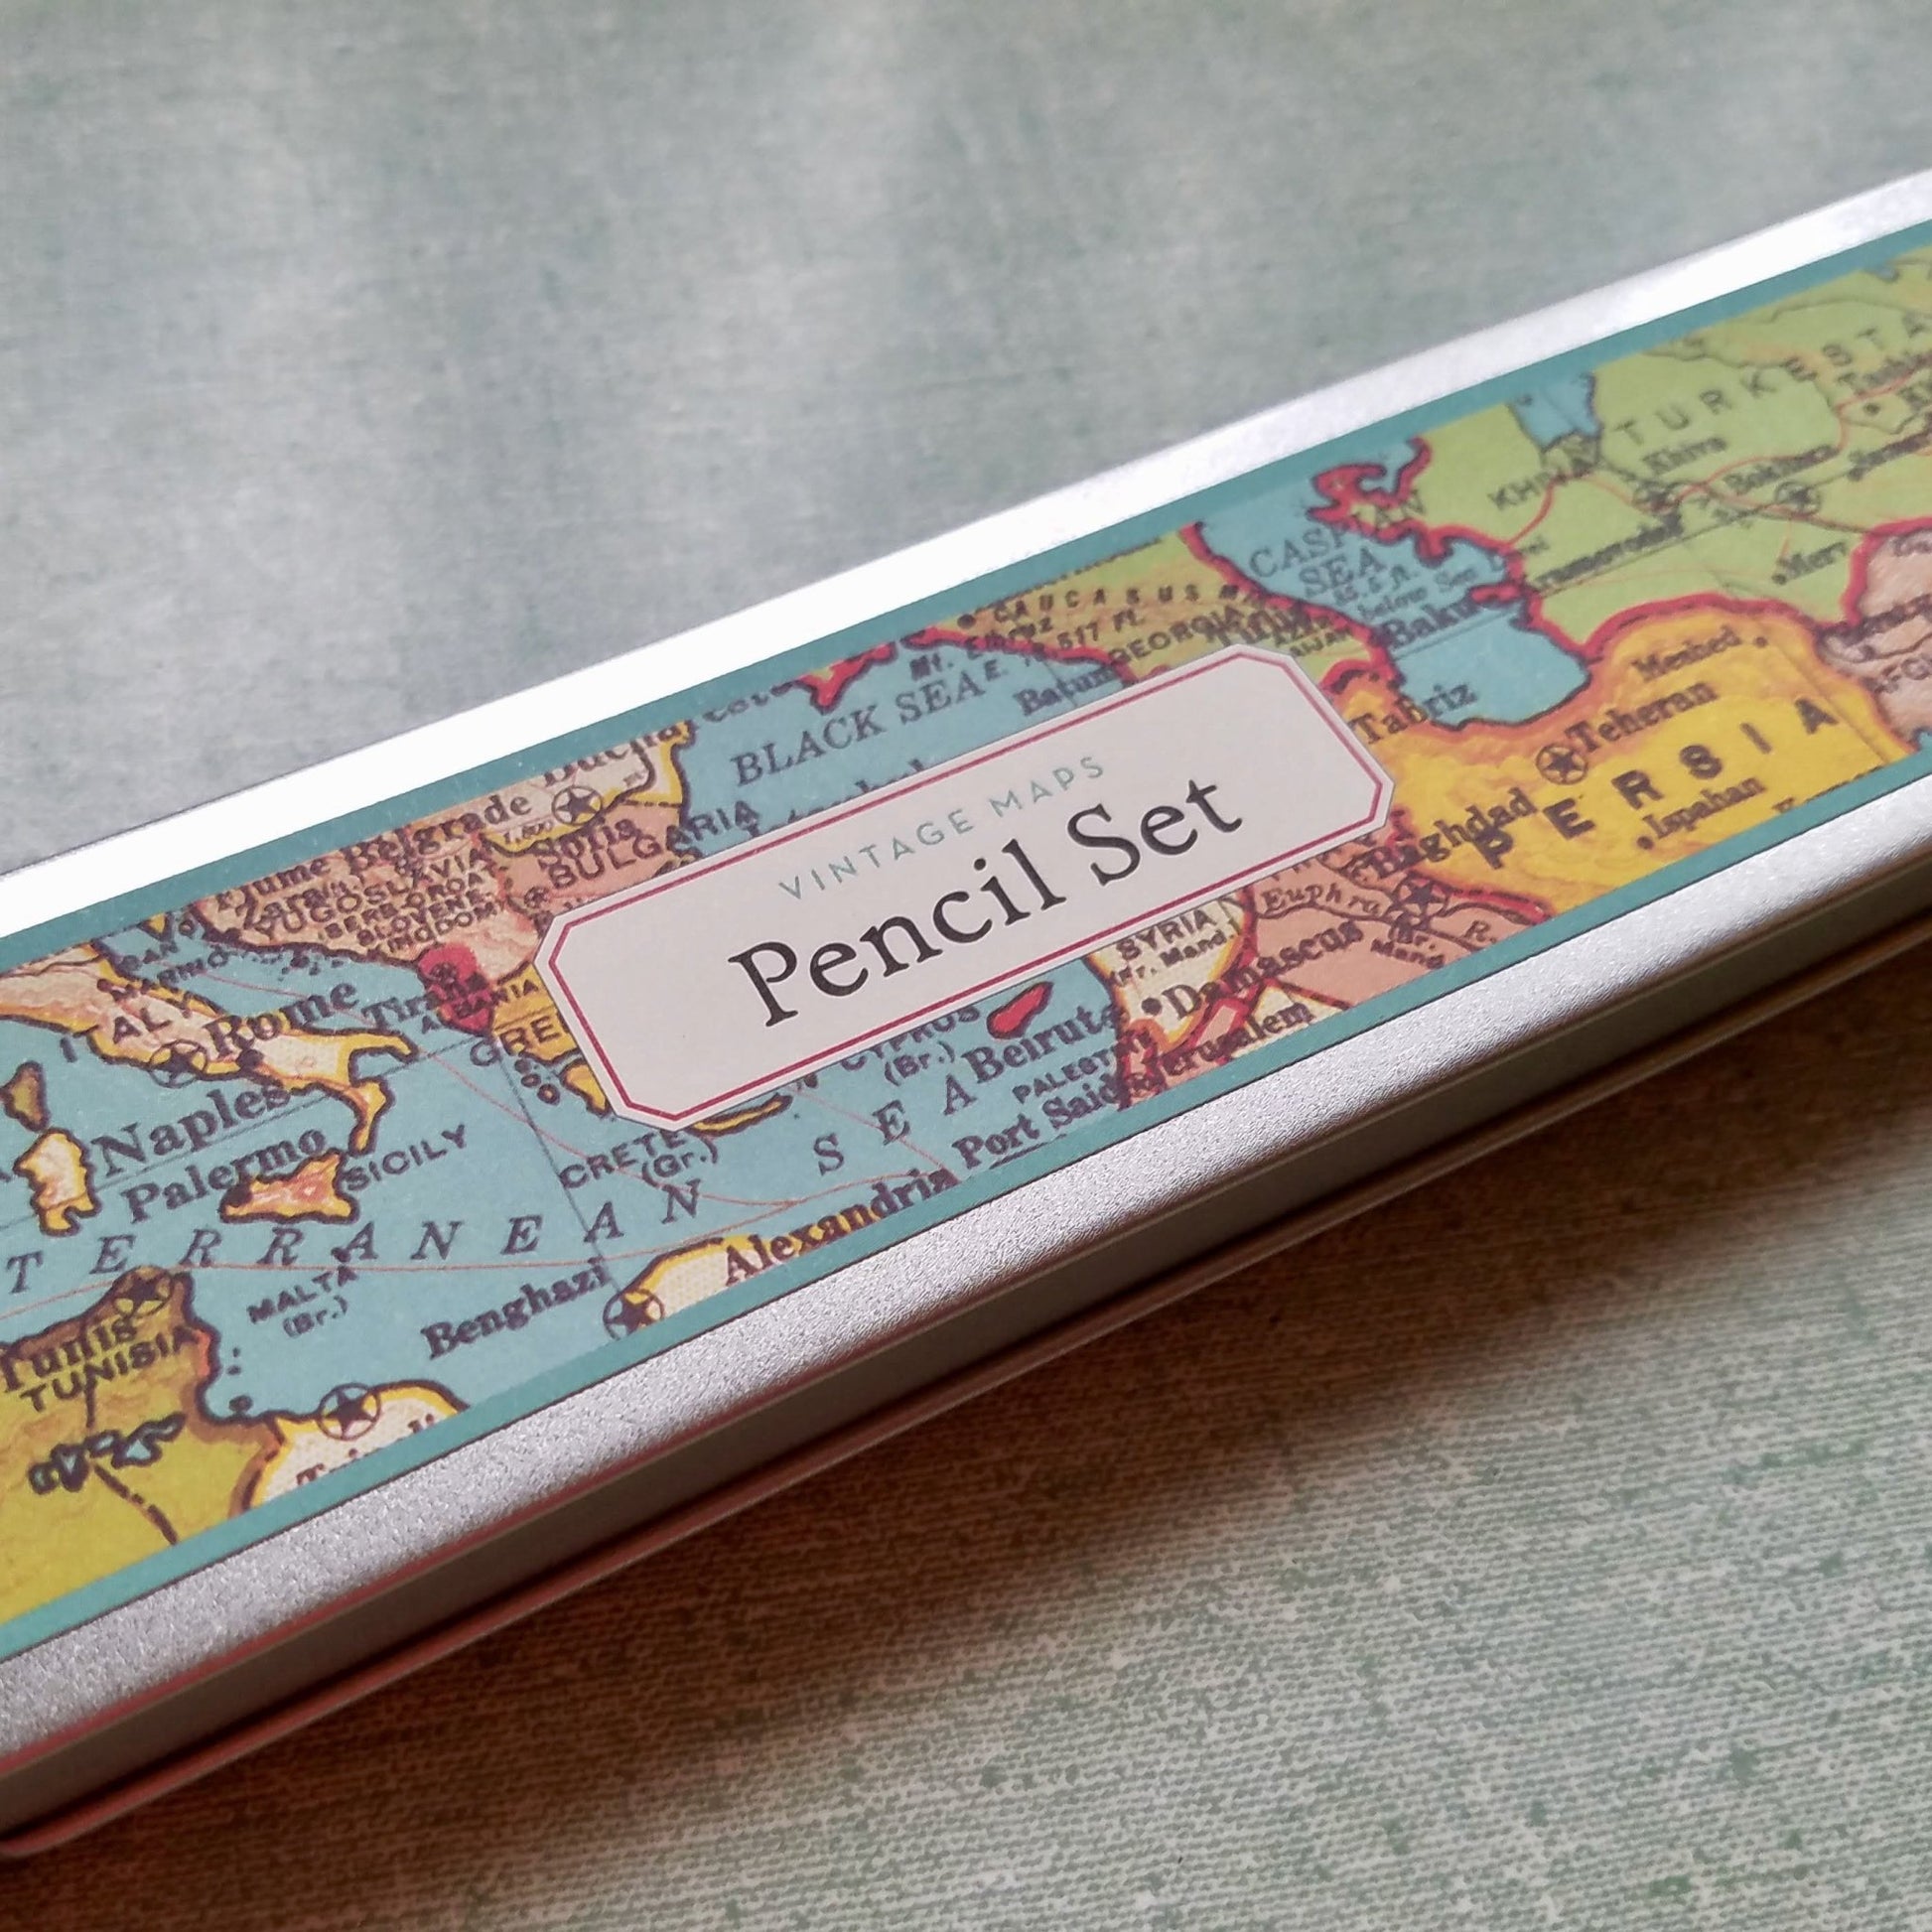 Vintage Maps Pencil Set - Marmalade Mercantile